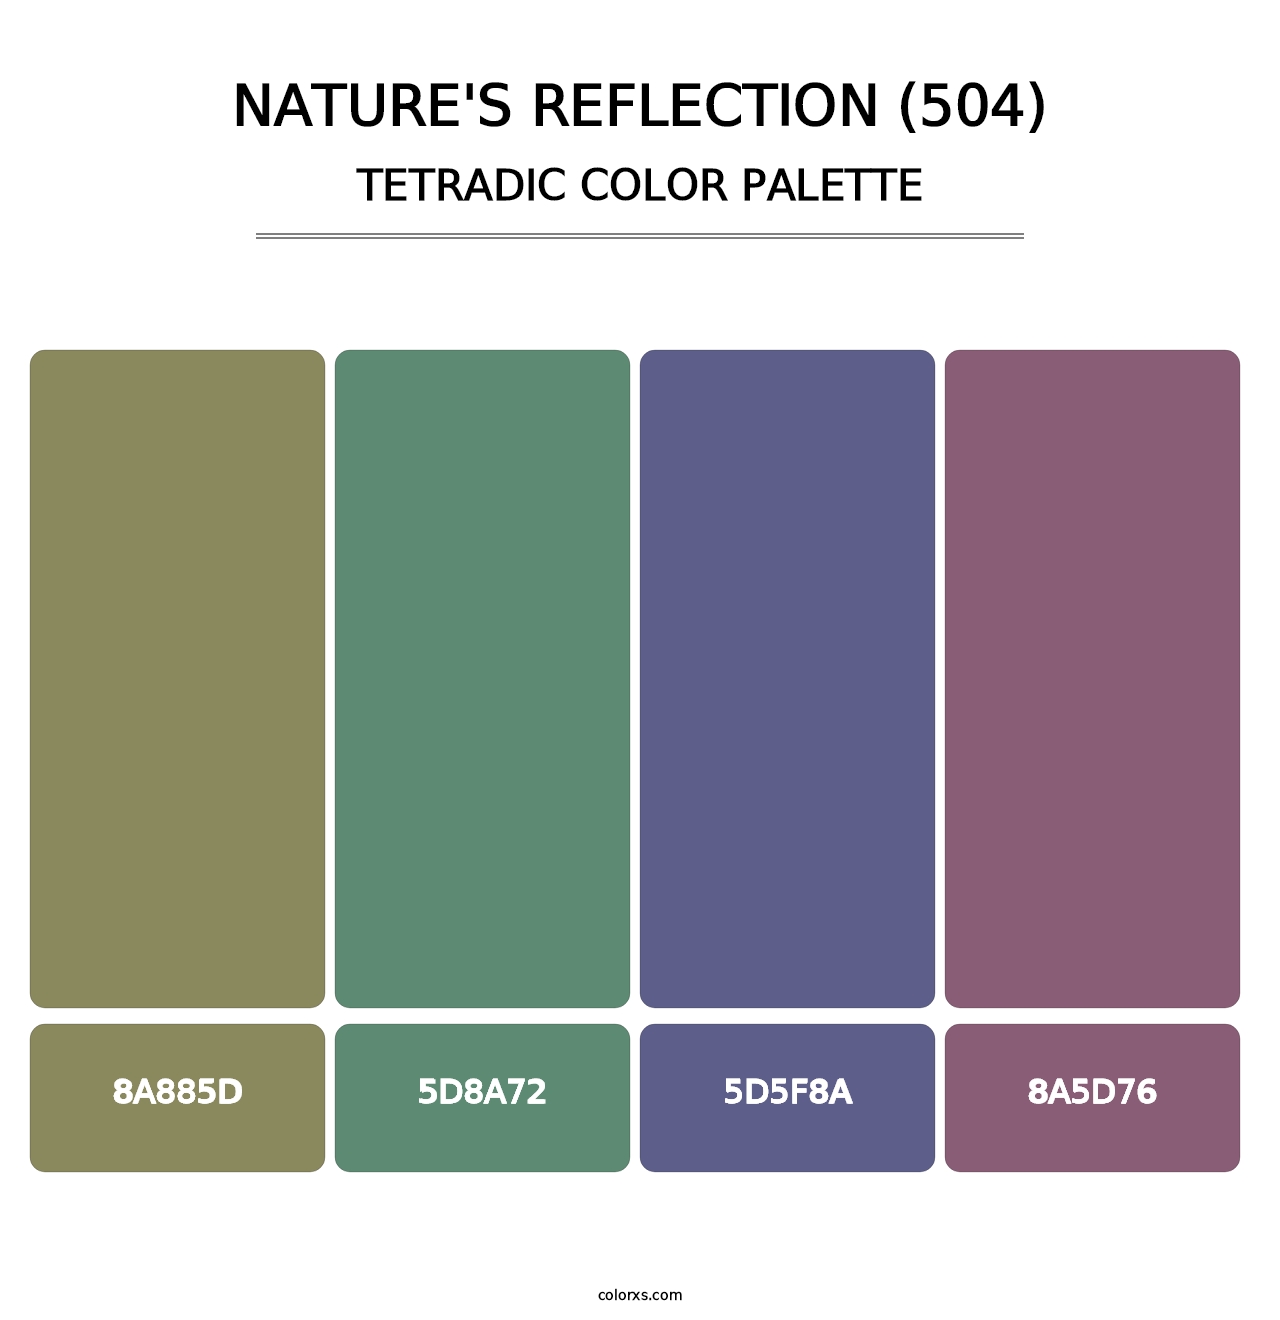 Nature's Reflection (504) - Tetradic Color Palette